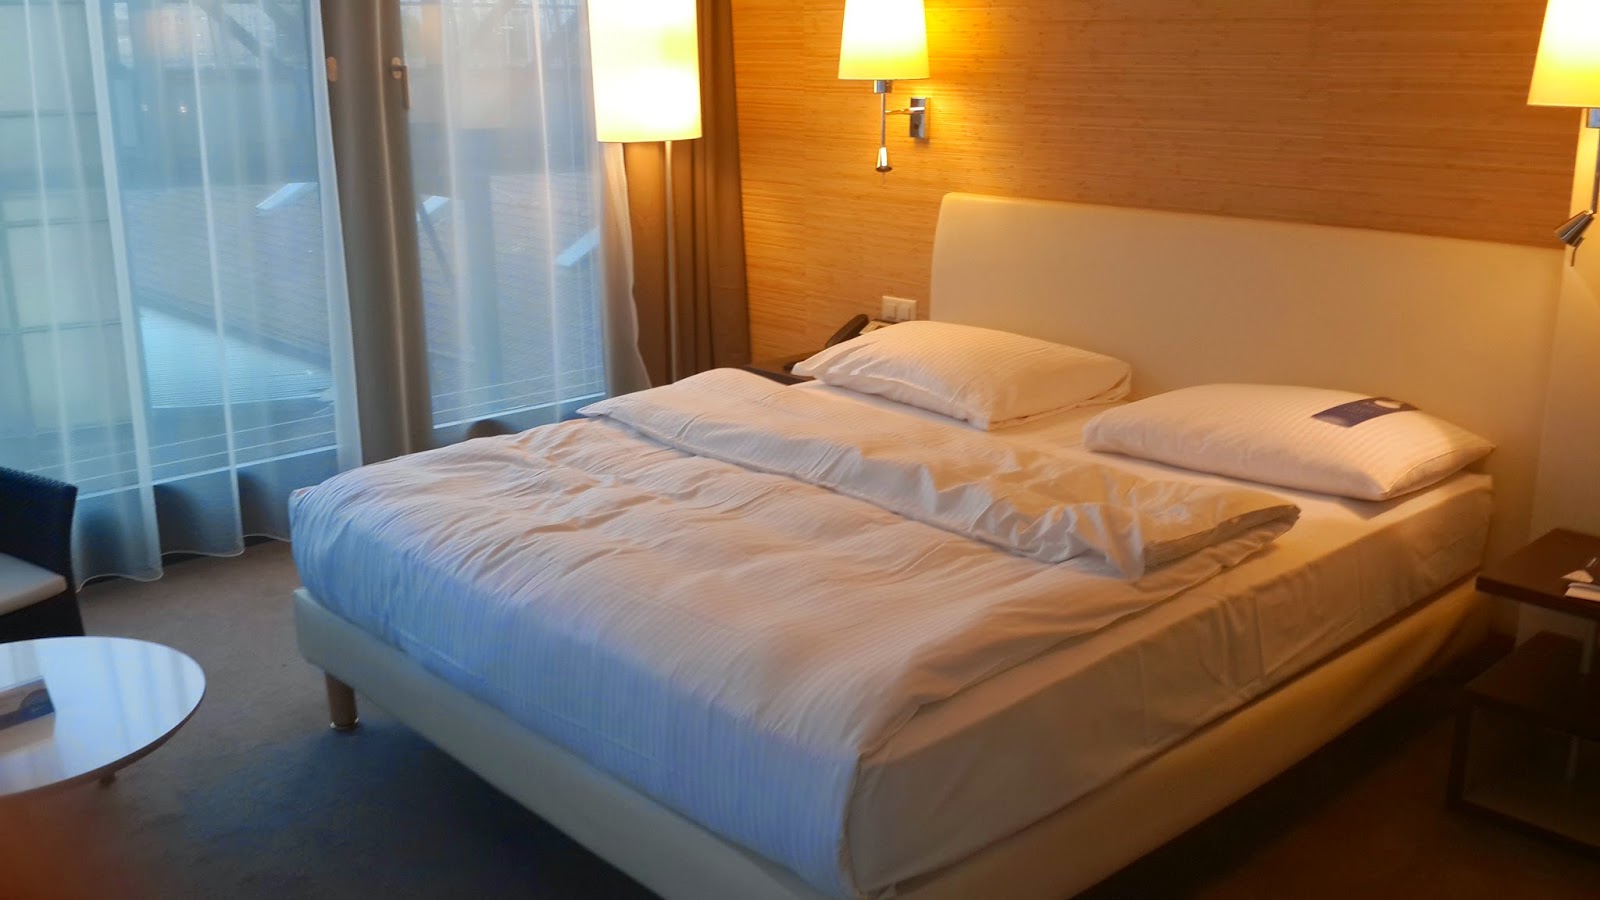 Radisson blu hotel lucerne room rate